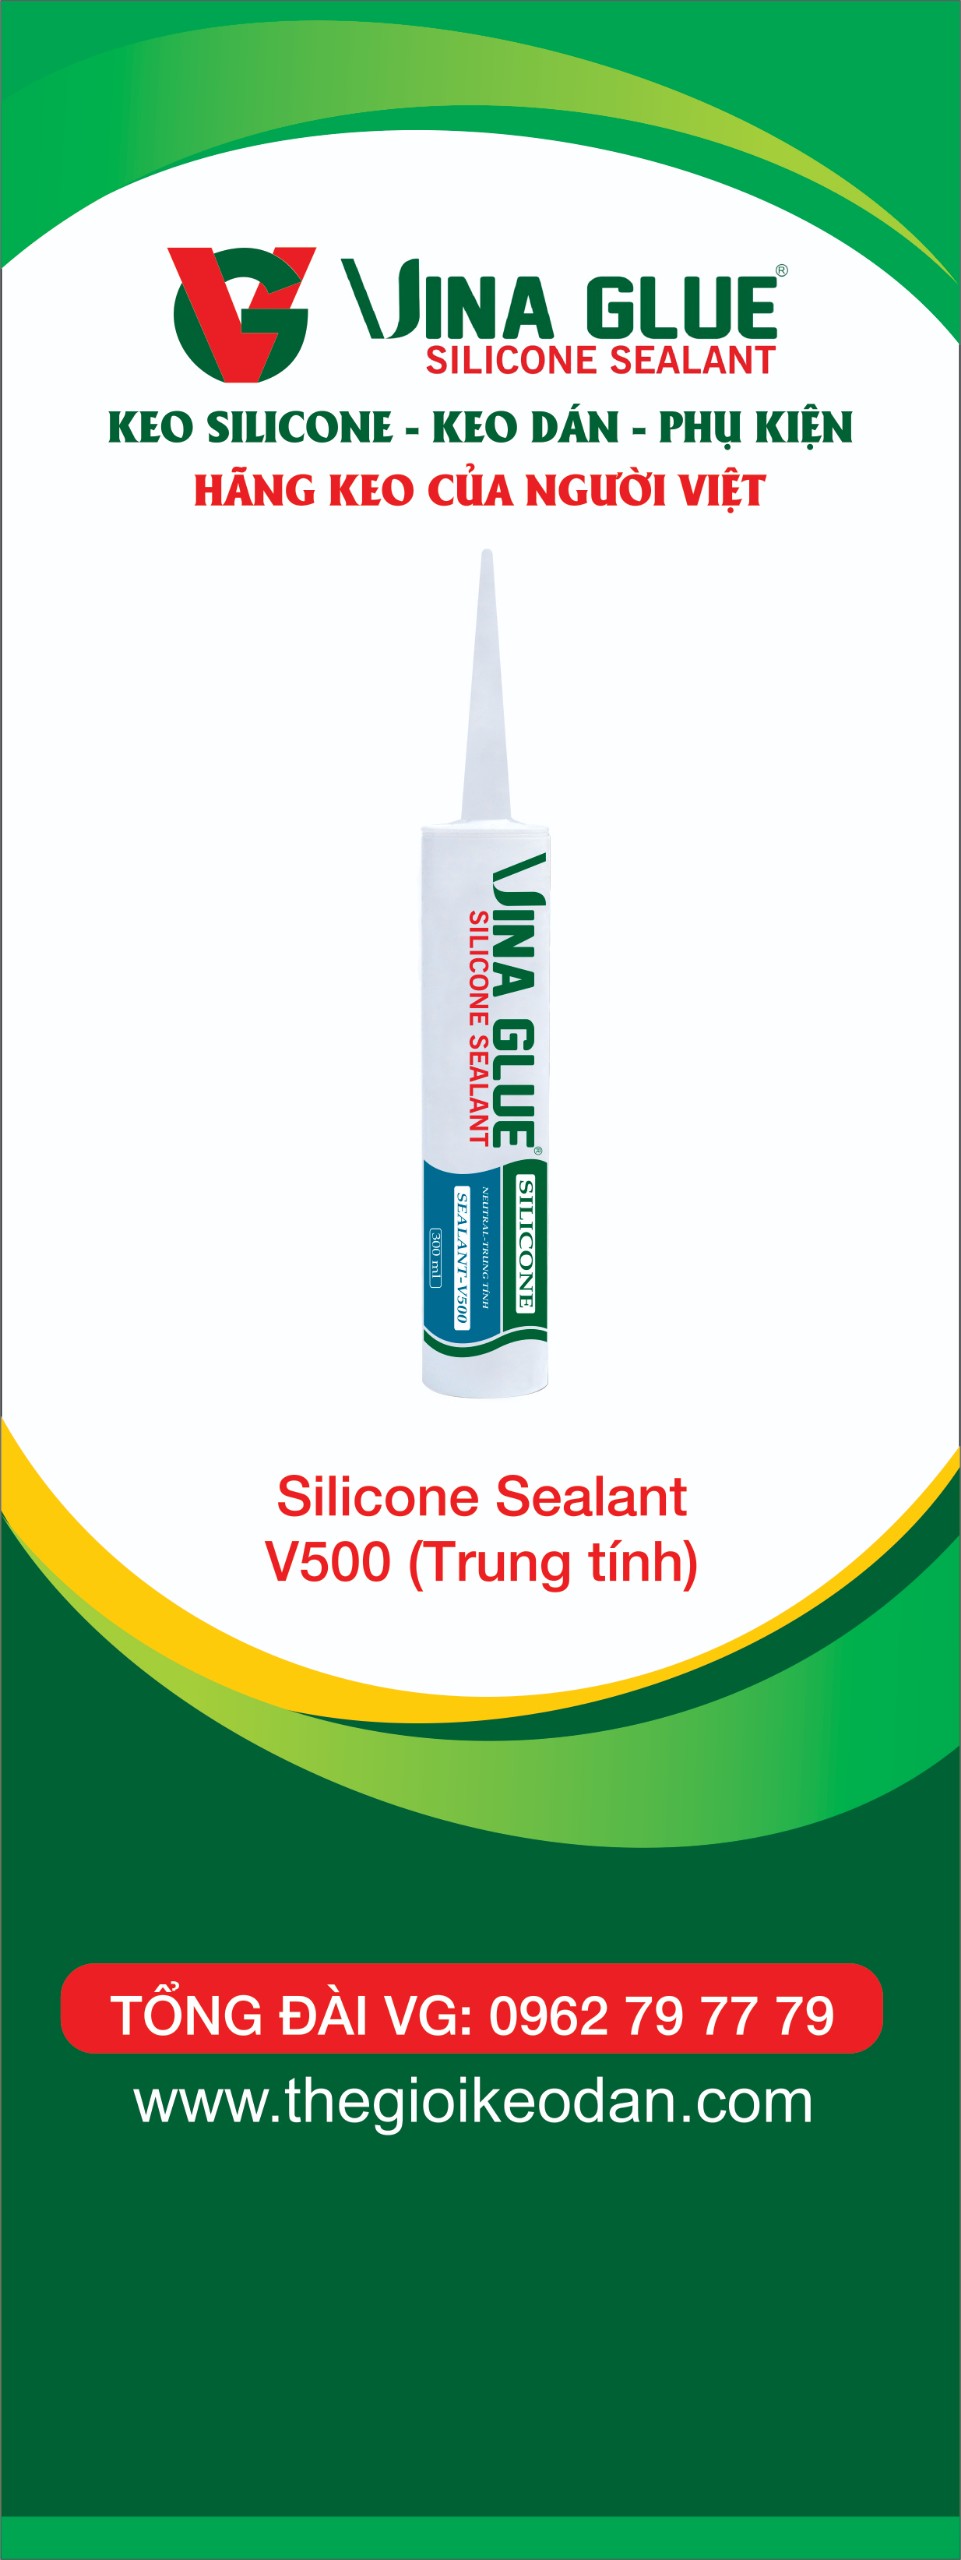 Silicone Sealant V500 (Trung tính) - Keo Silicone VINA GLUE